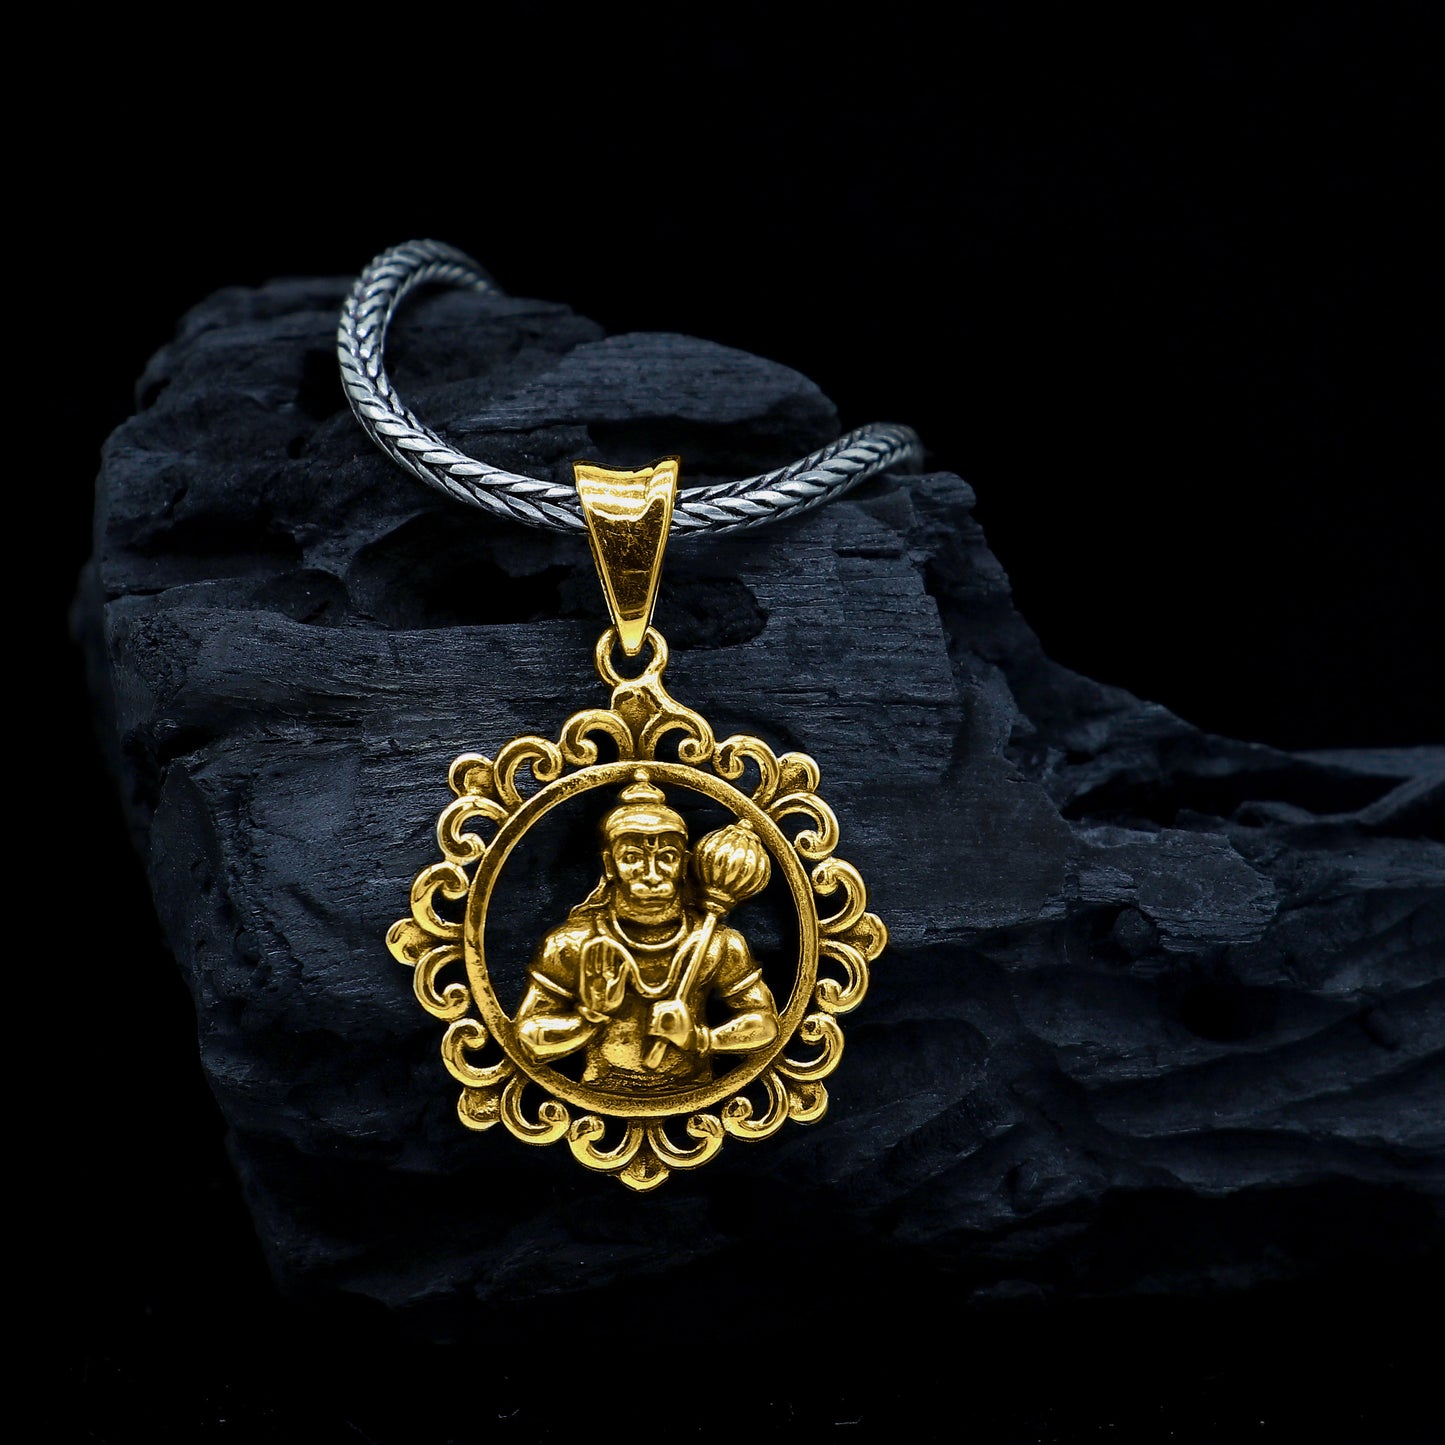 925 sterling silver handmade Hindu idol God  Lord hanuman pendant, amazing divine lord bajarangbali pendant unisex gifting jewelry NSP688 - TRIBAL ORNAMENTS